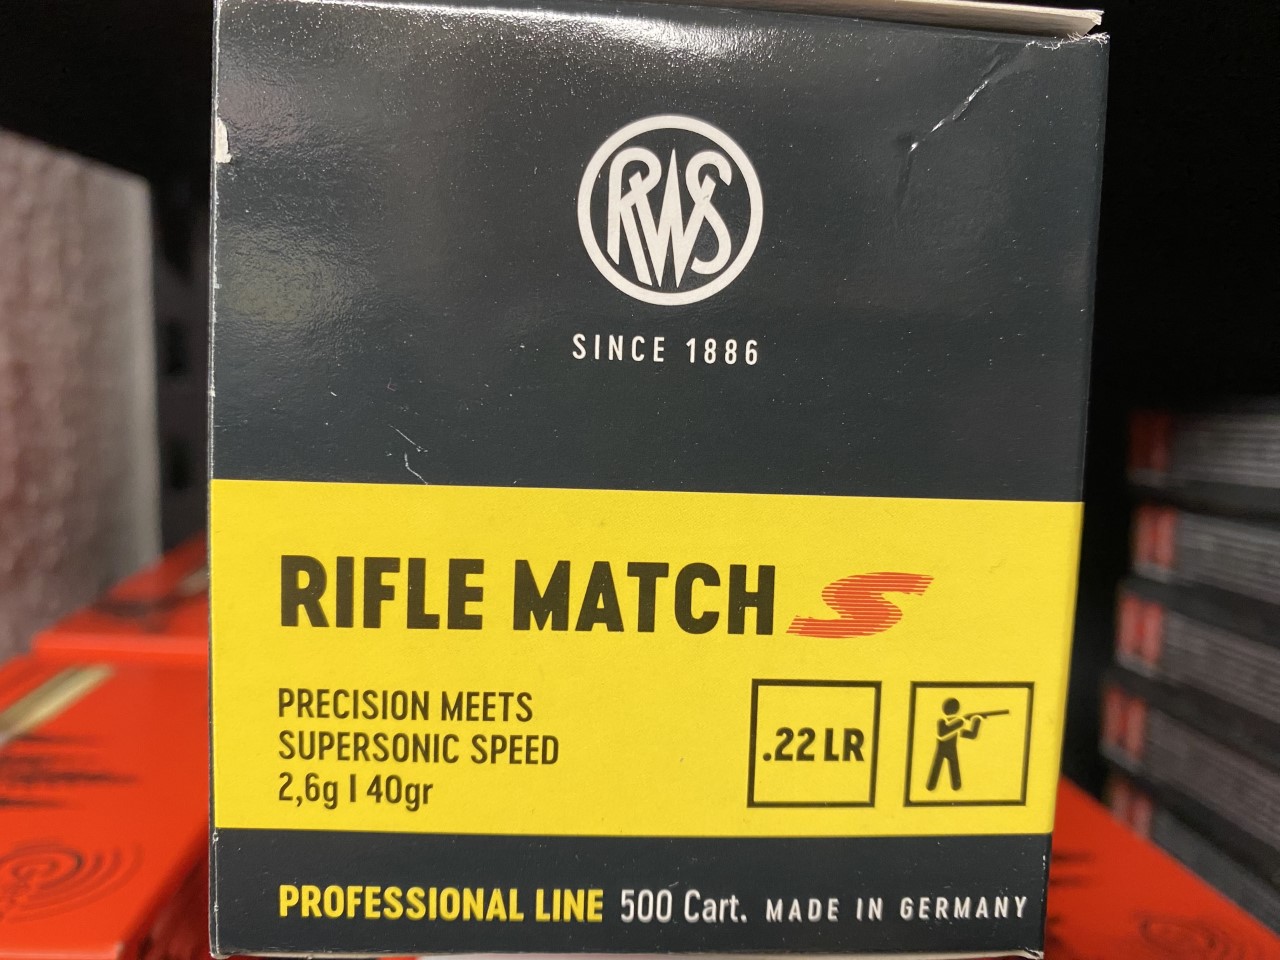 RWS .22LR Rifle Match S 40gr